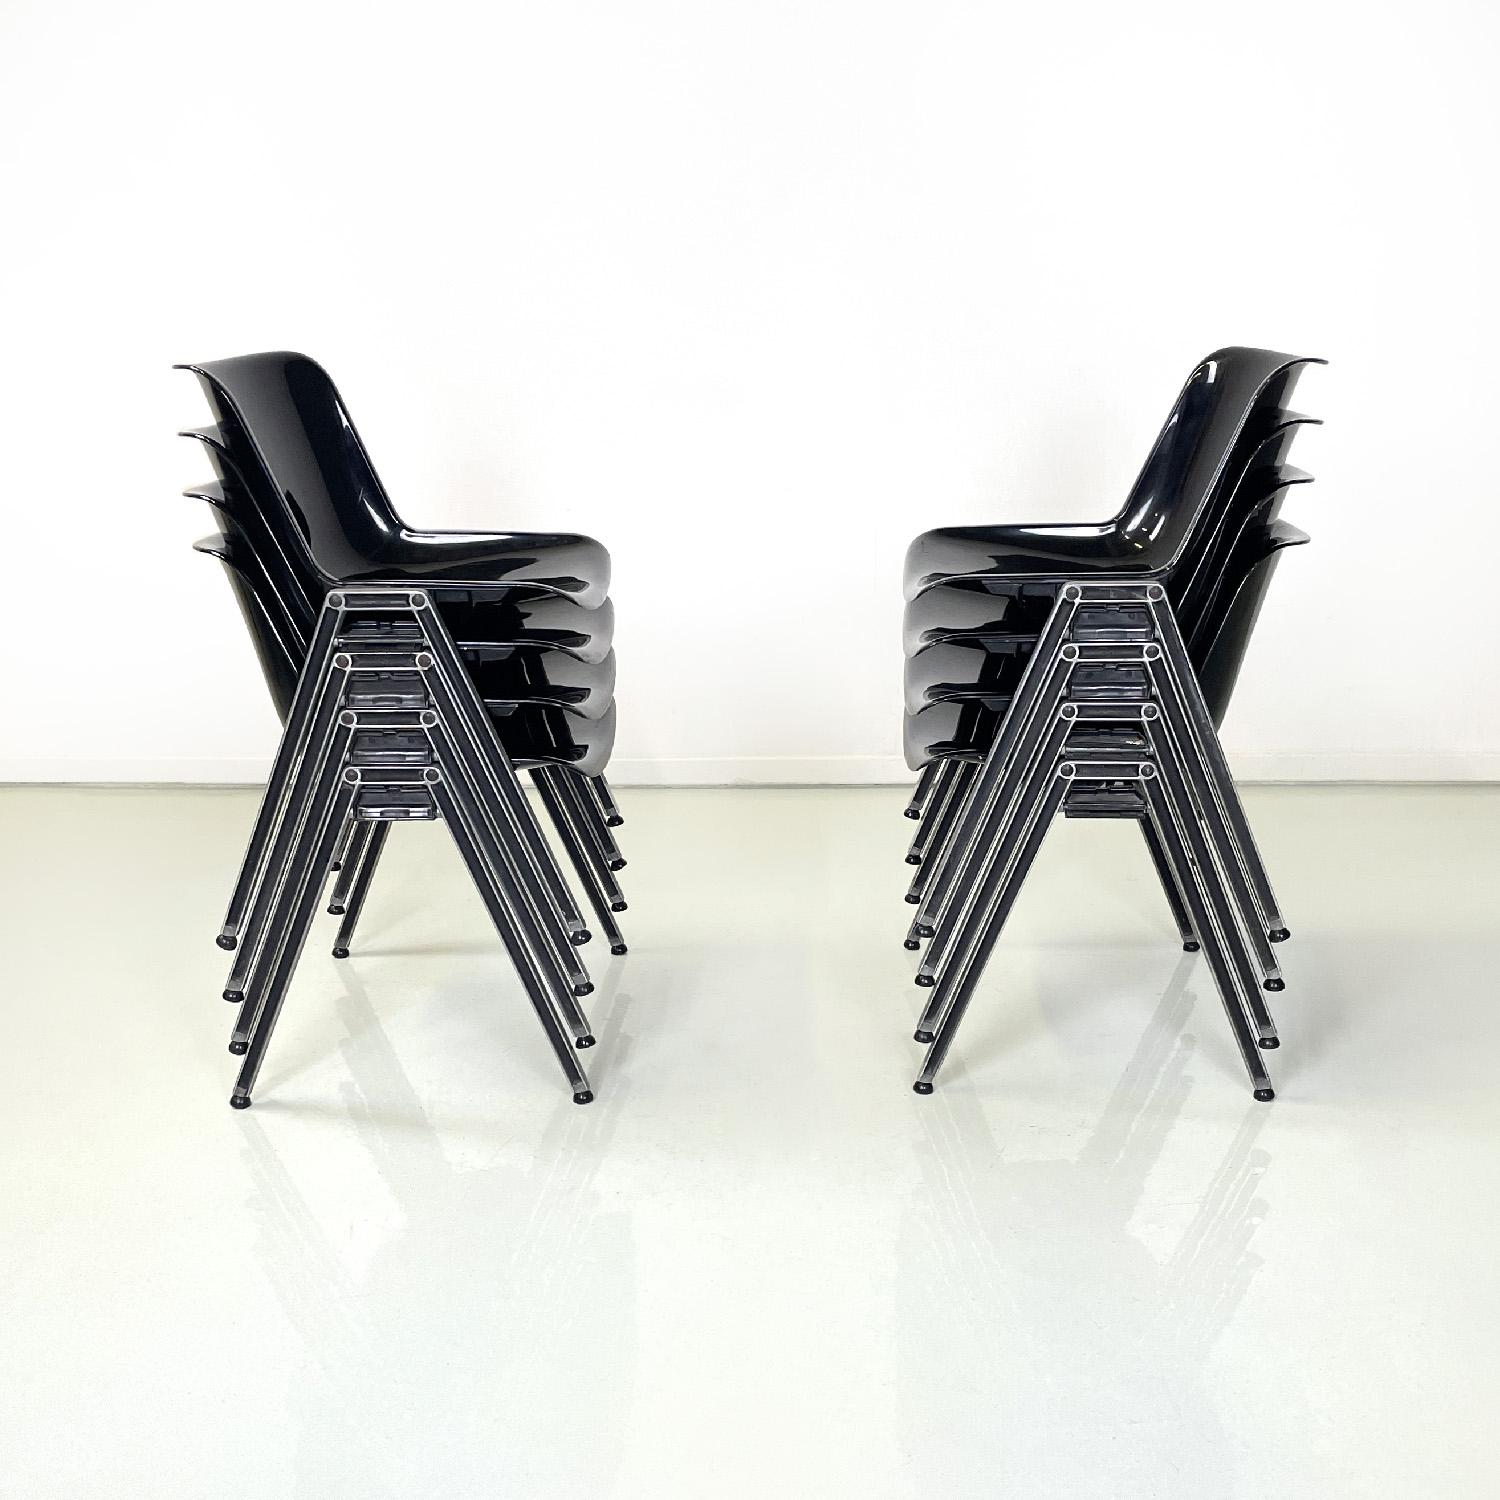 Modern Italian modern black plastic chairs Modus SM 203 by Borsani for Tecno, 1980s For Sale